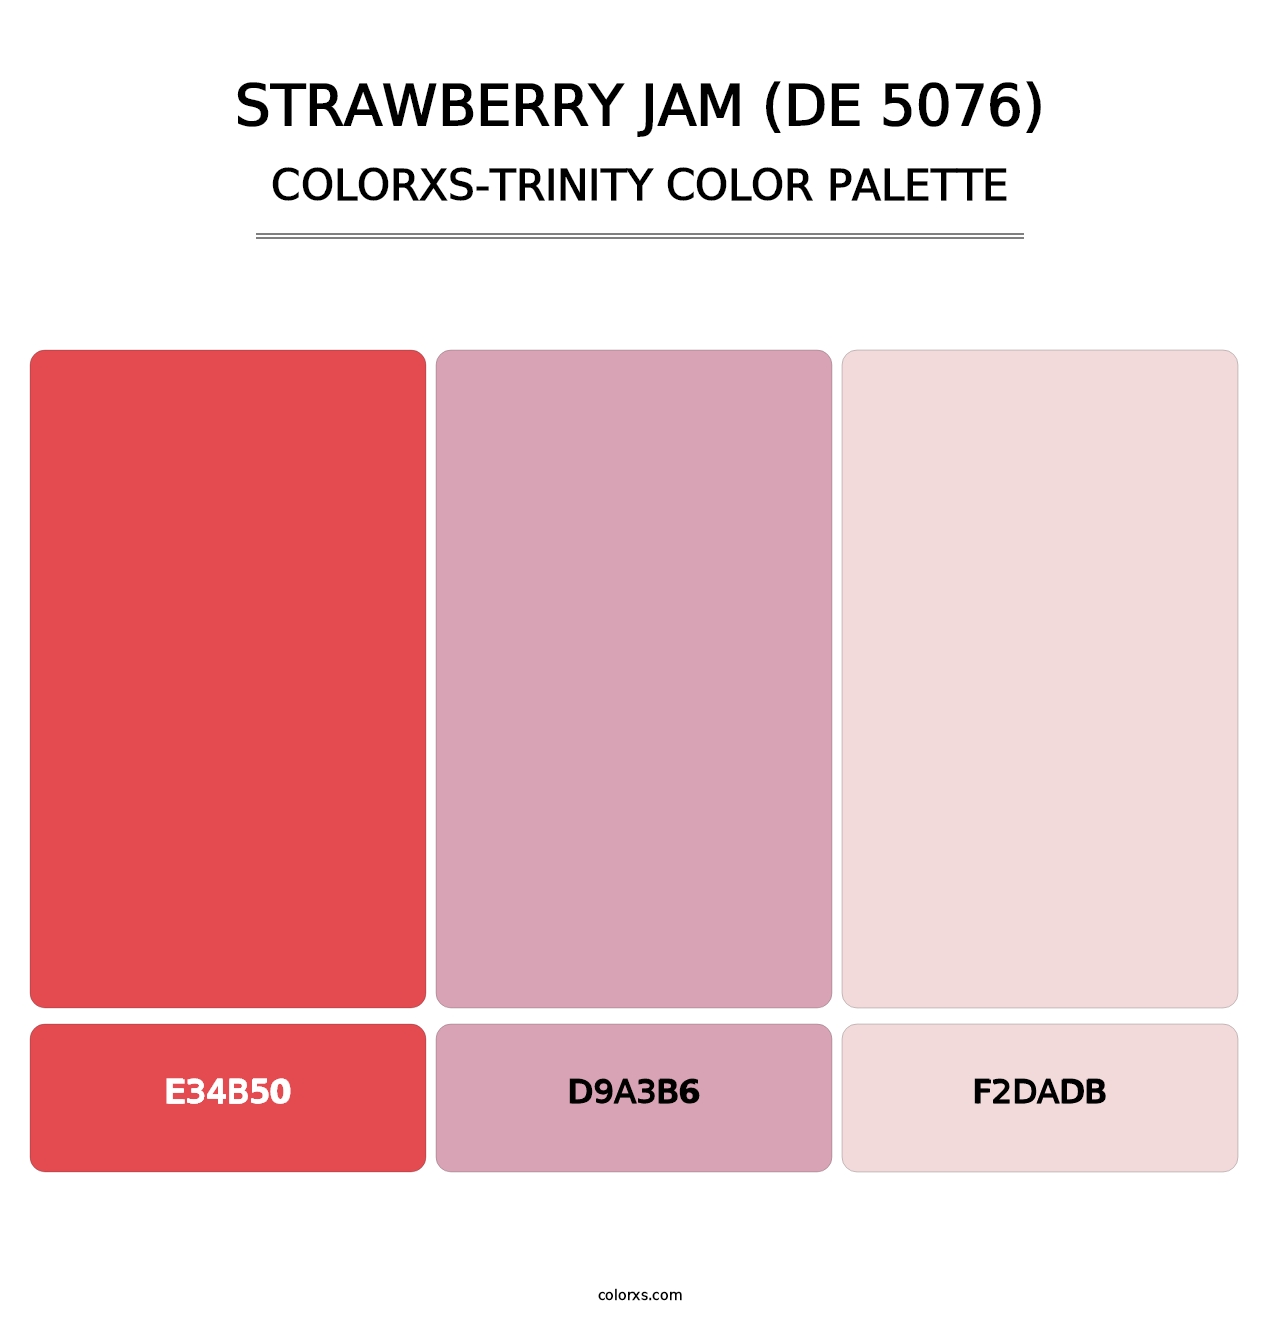 Strawberry Jam (DE 5076) - Colorxs Trinity Palette